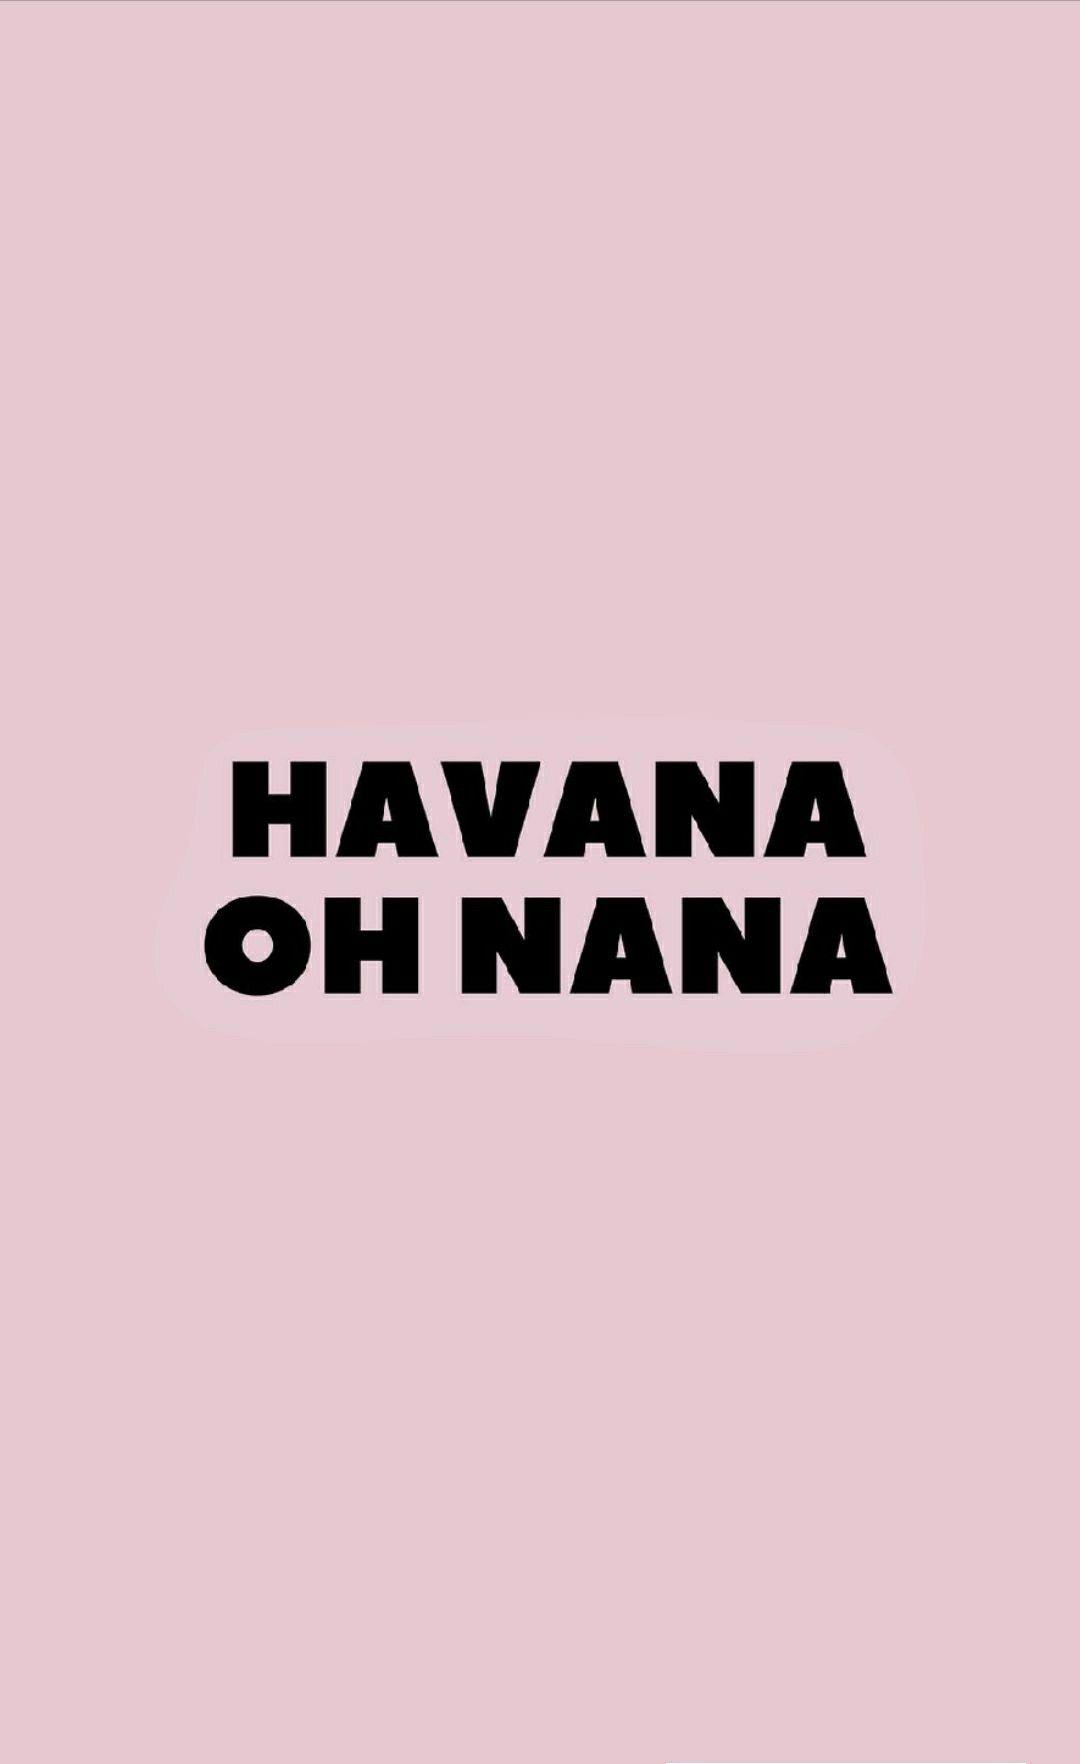 Wallpaper Havana Oh Nana. WALLPAPER